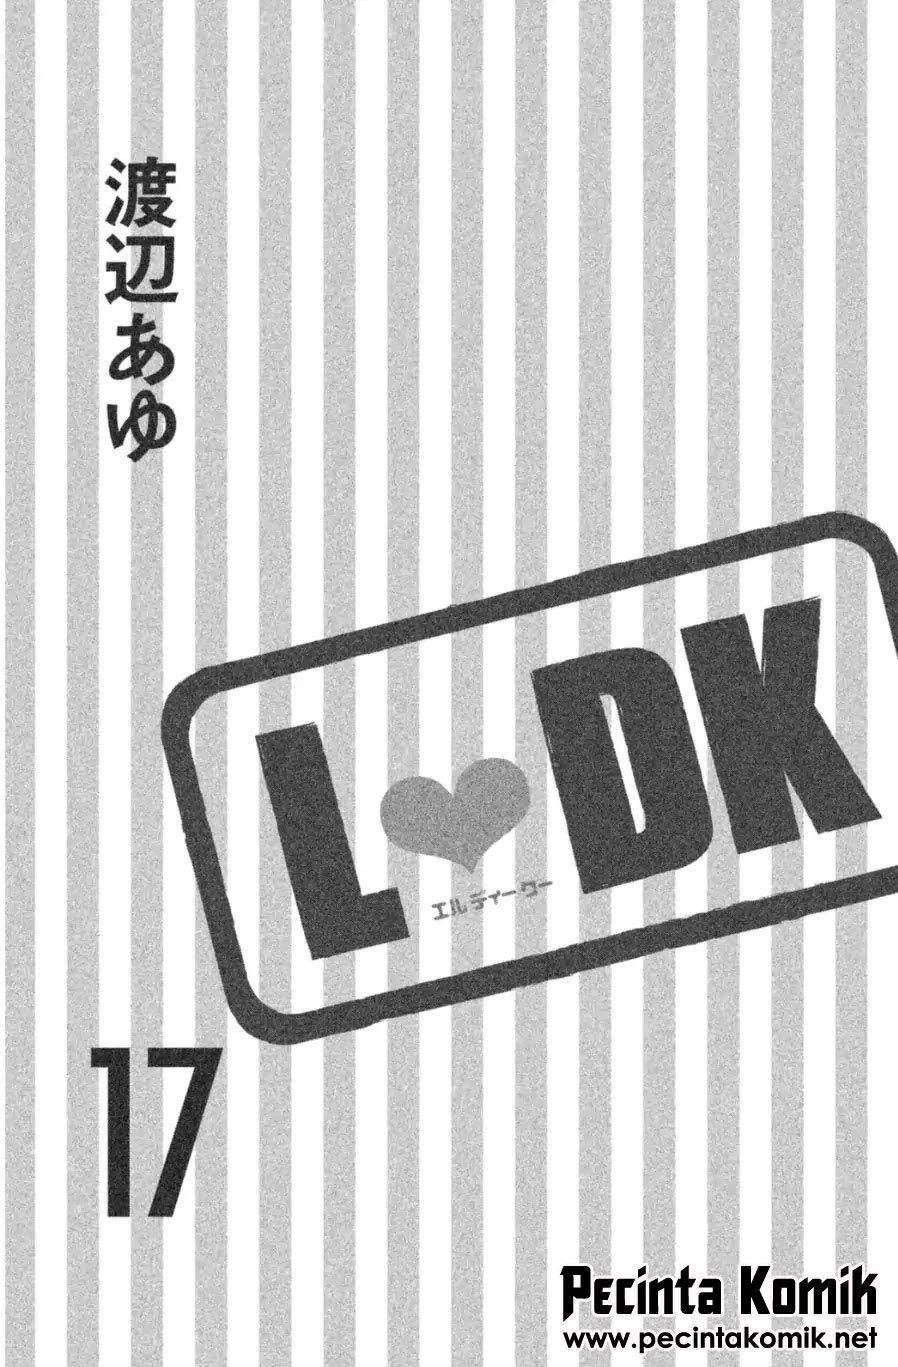 L-DK Chapter 65